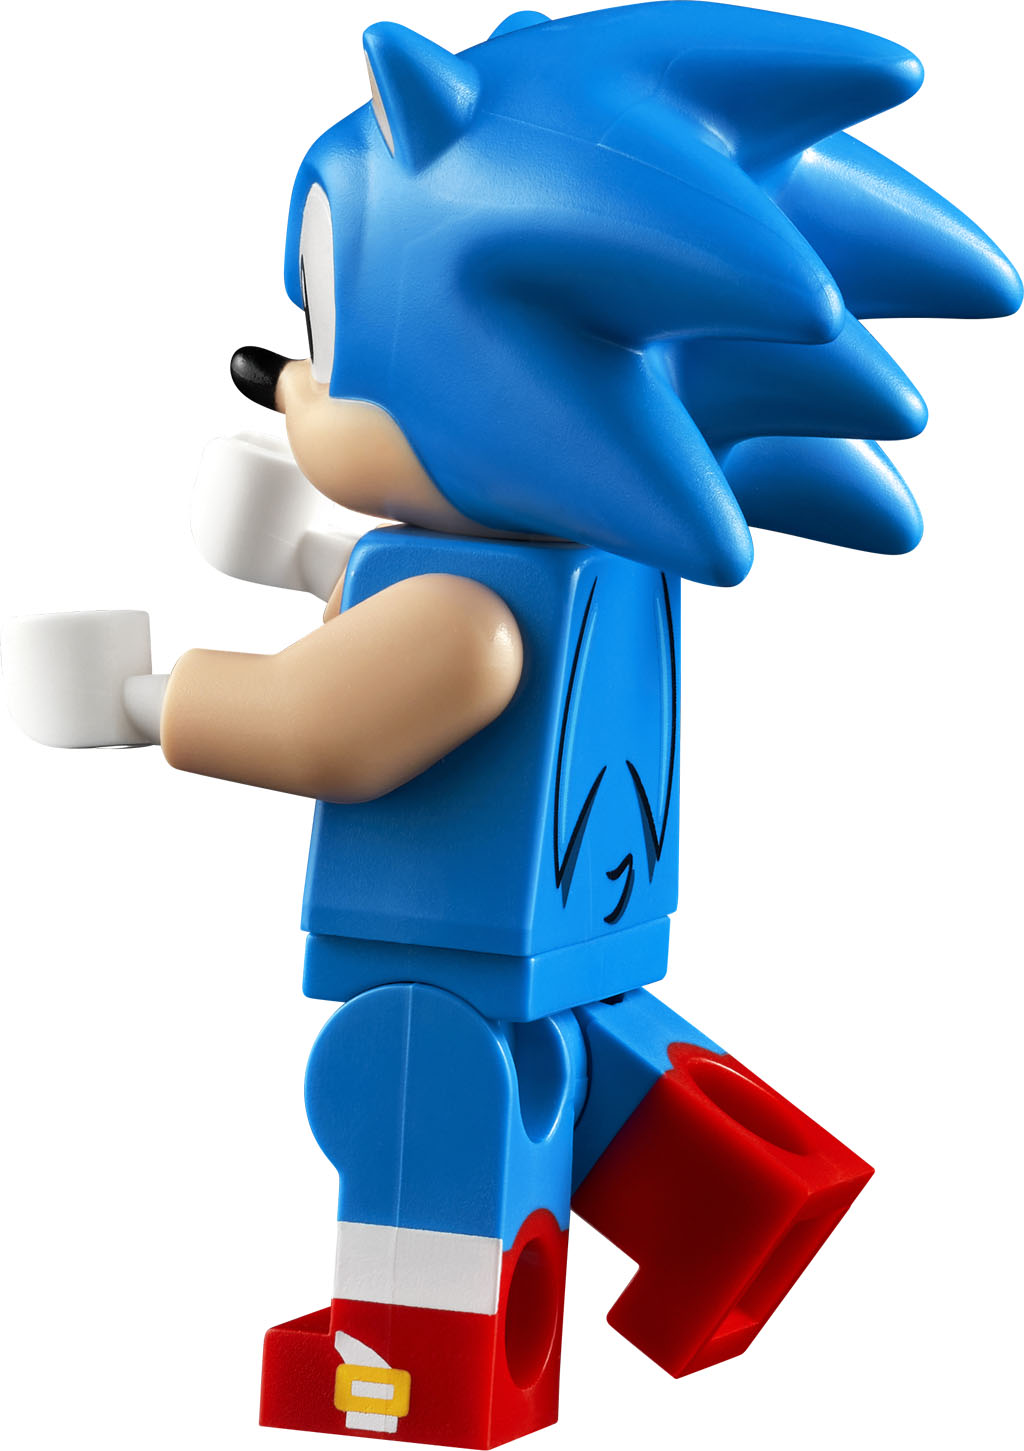 LEGO Ideas - Sonic the Hedgehog: green Hill Zone - 21331